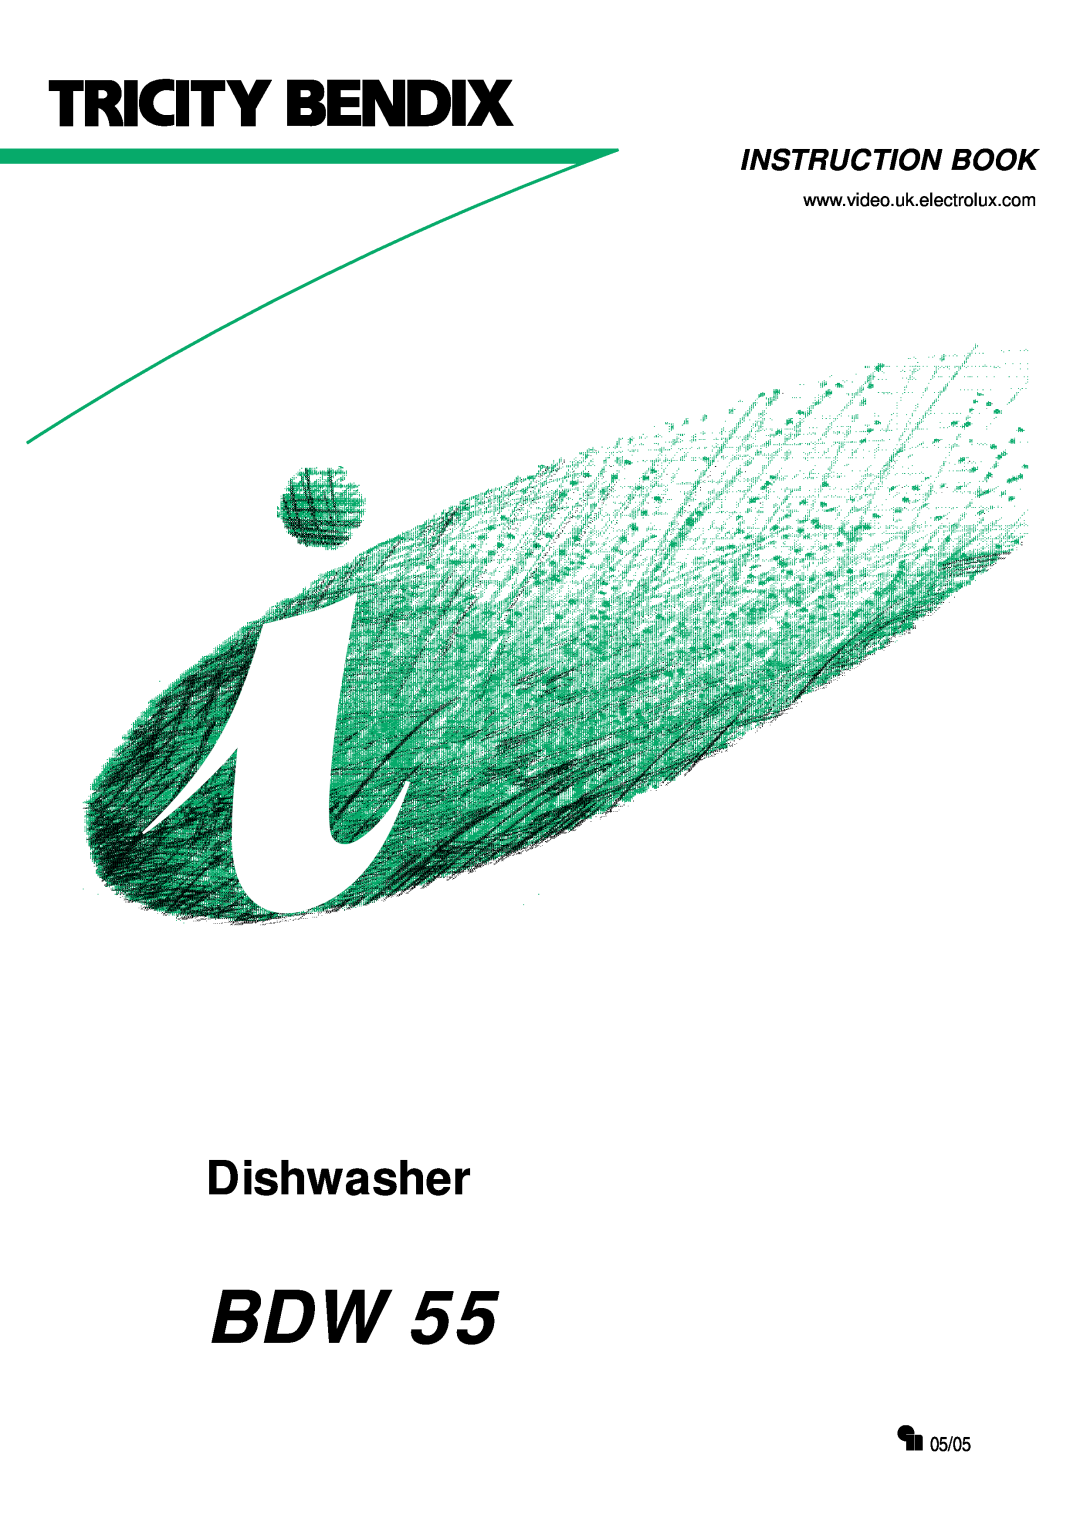 Tricity Bendix BDW 55 manual 05/05, Dishwasher, Instruction Book 